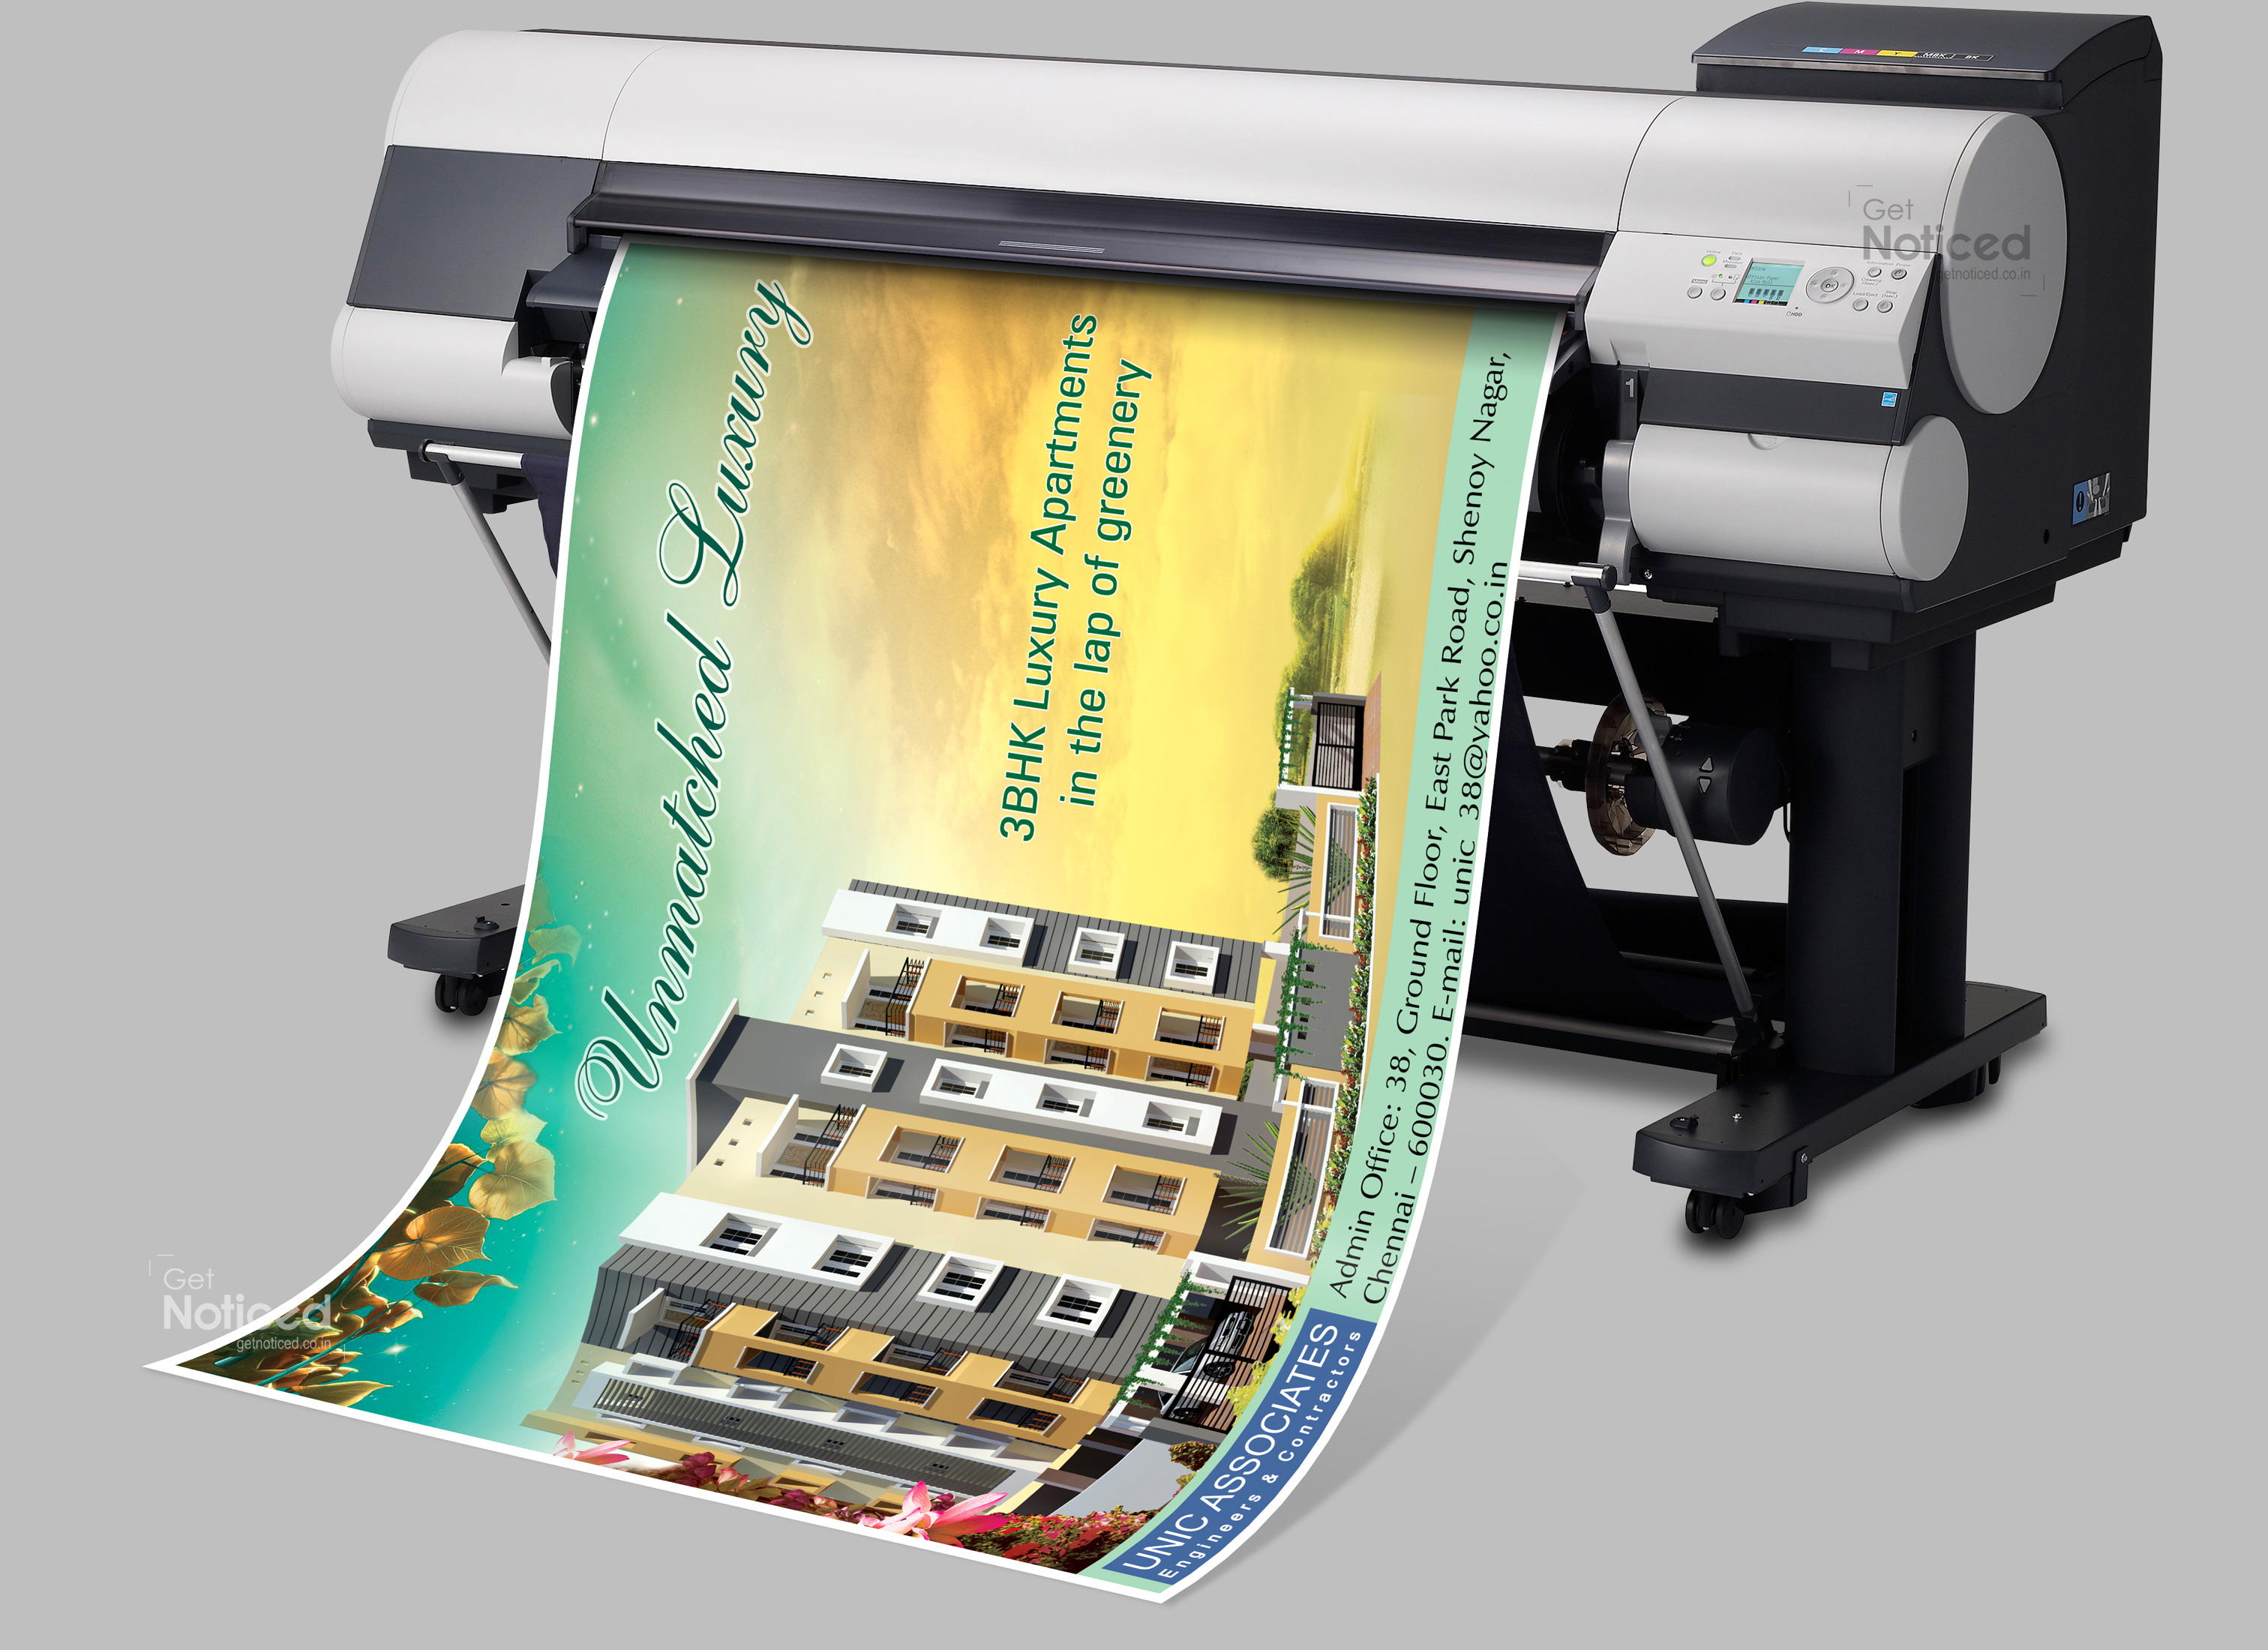 Unic Associates Hoarding Designing & Flex Printing